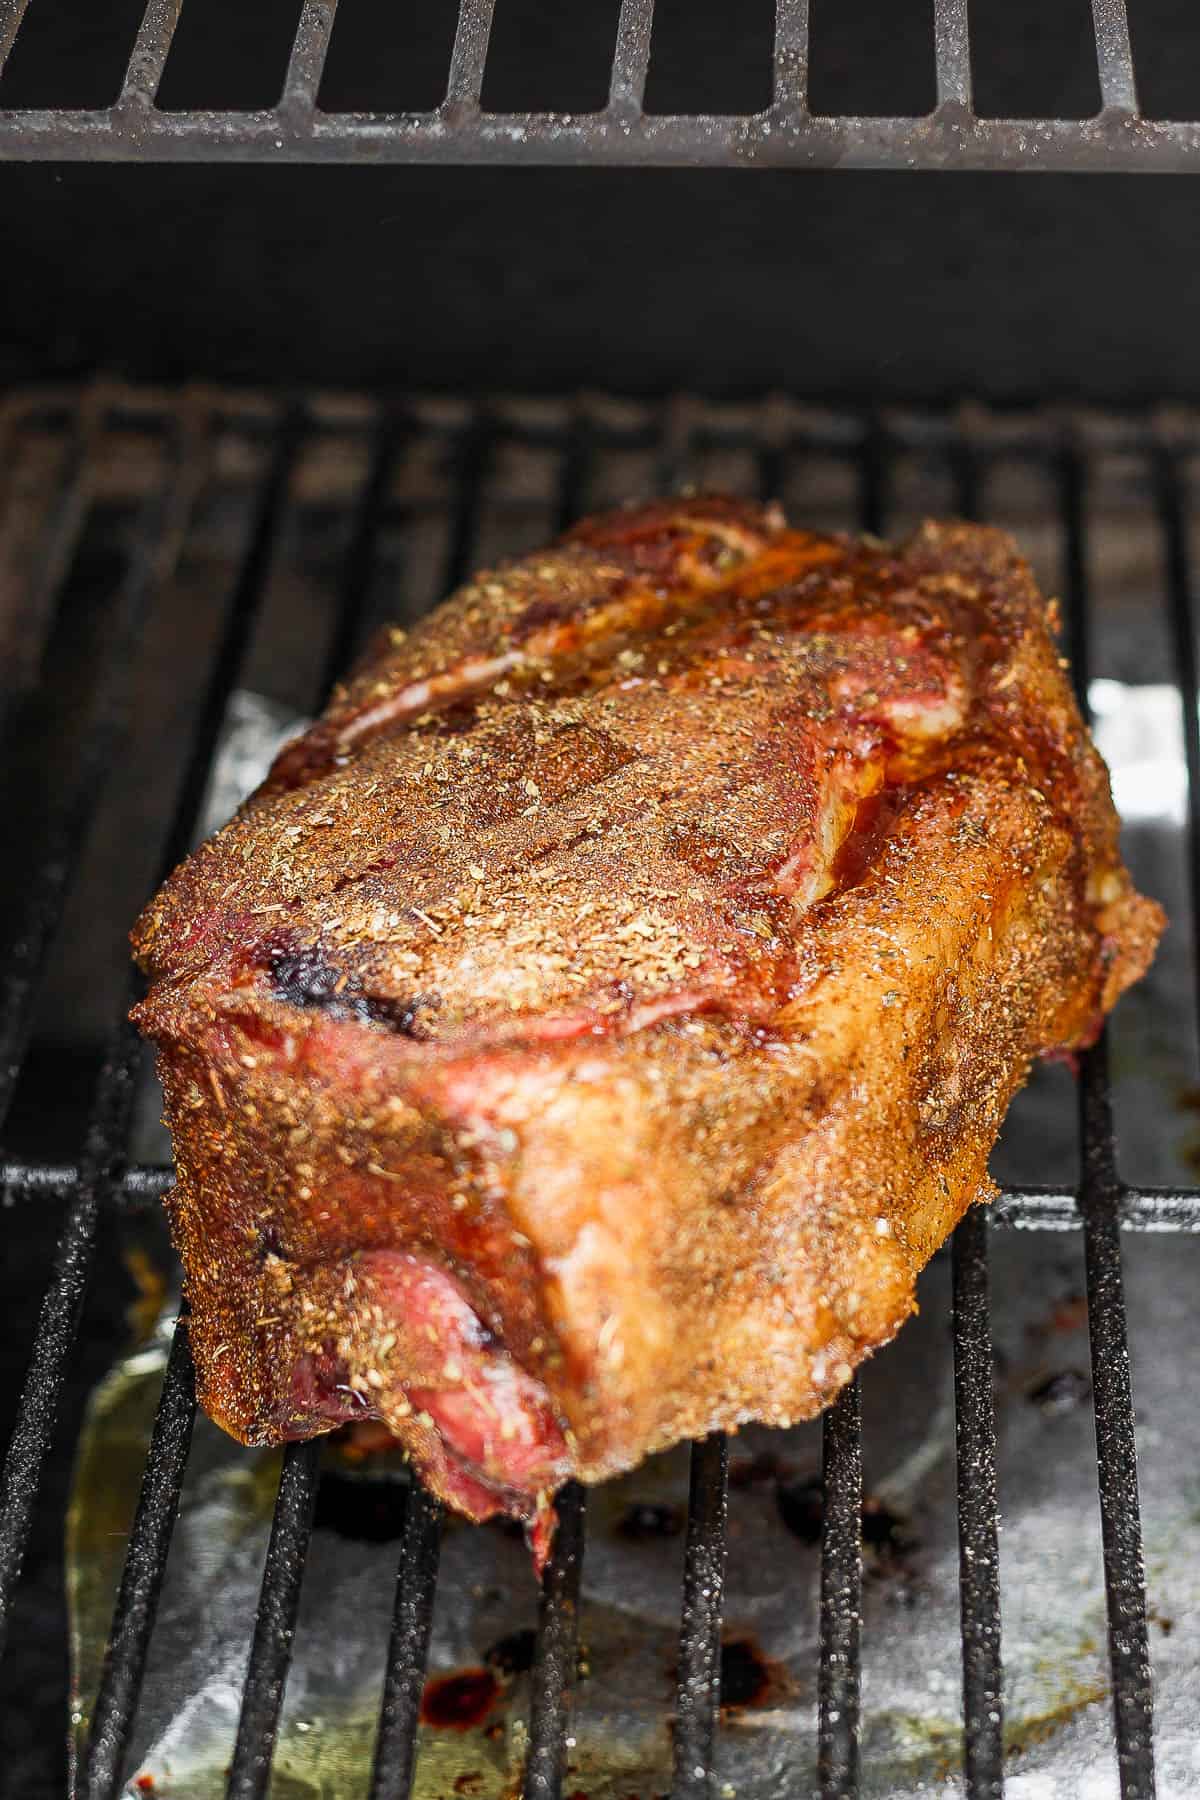 Seasoned pork shoulder on the grates of the smoker.